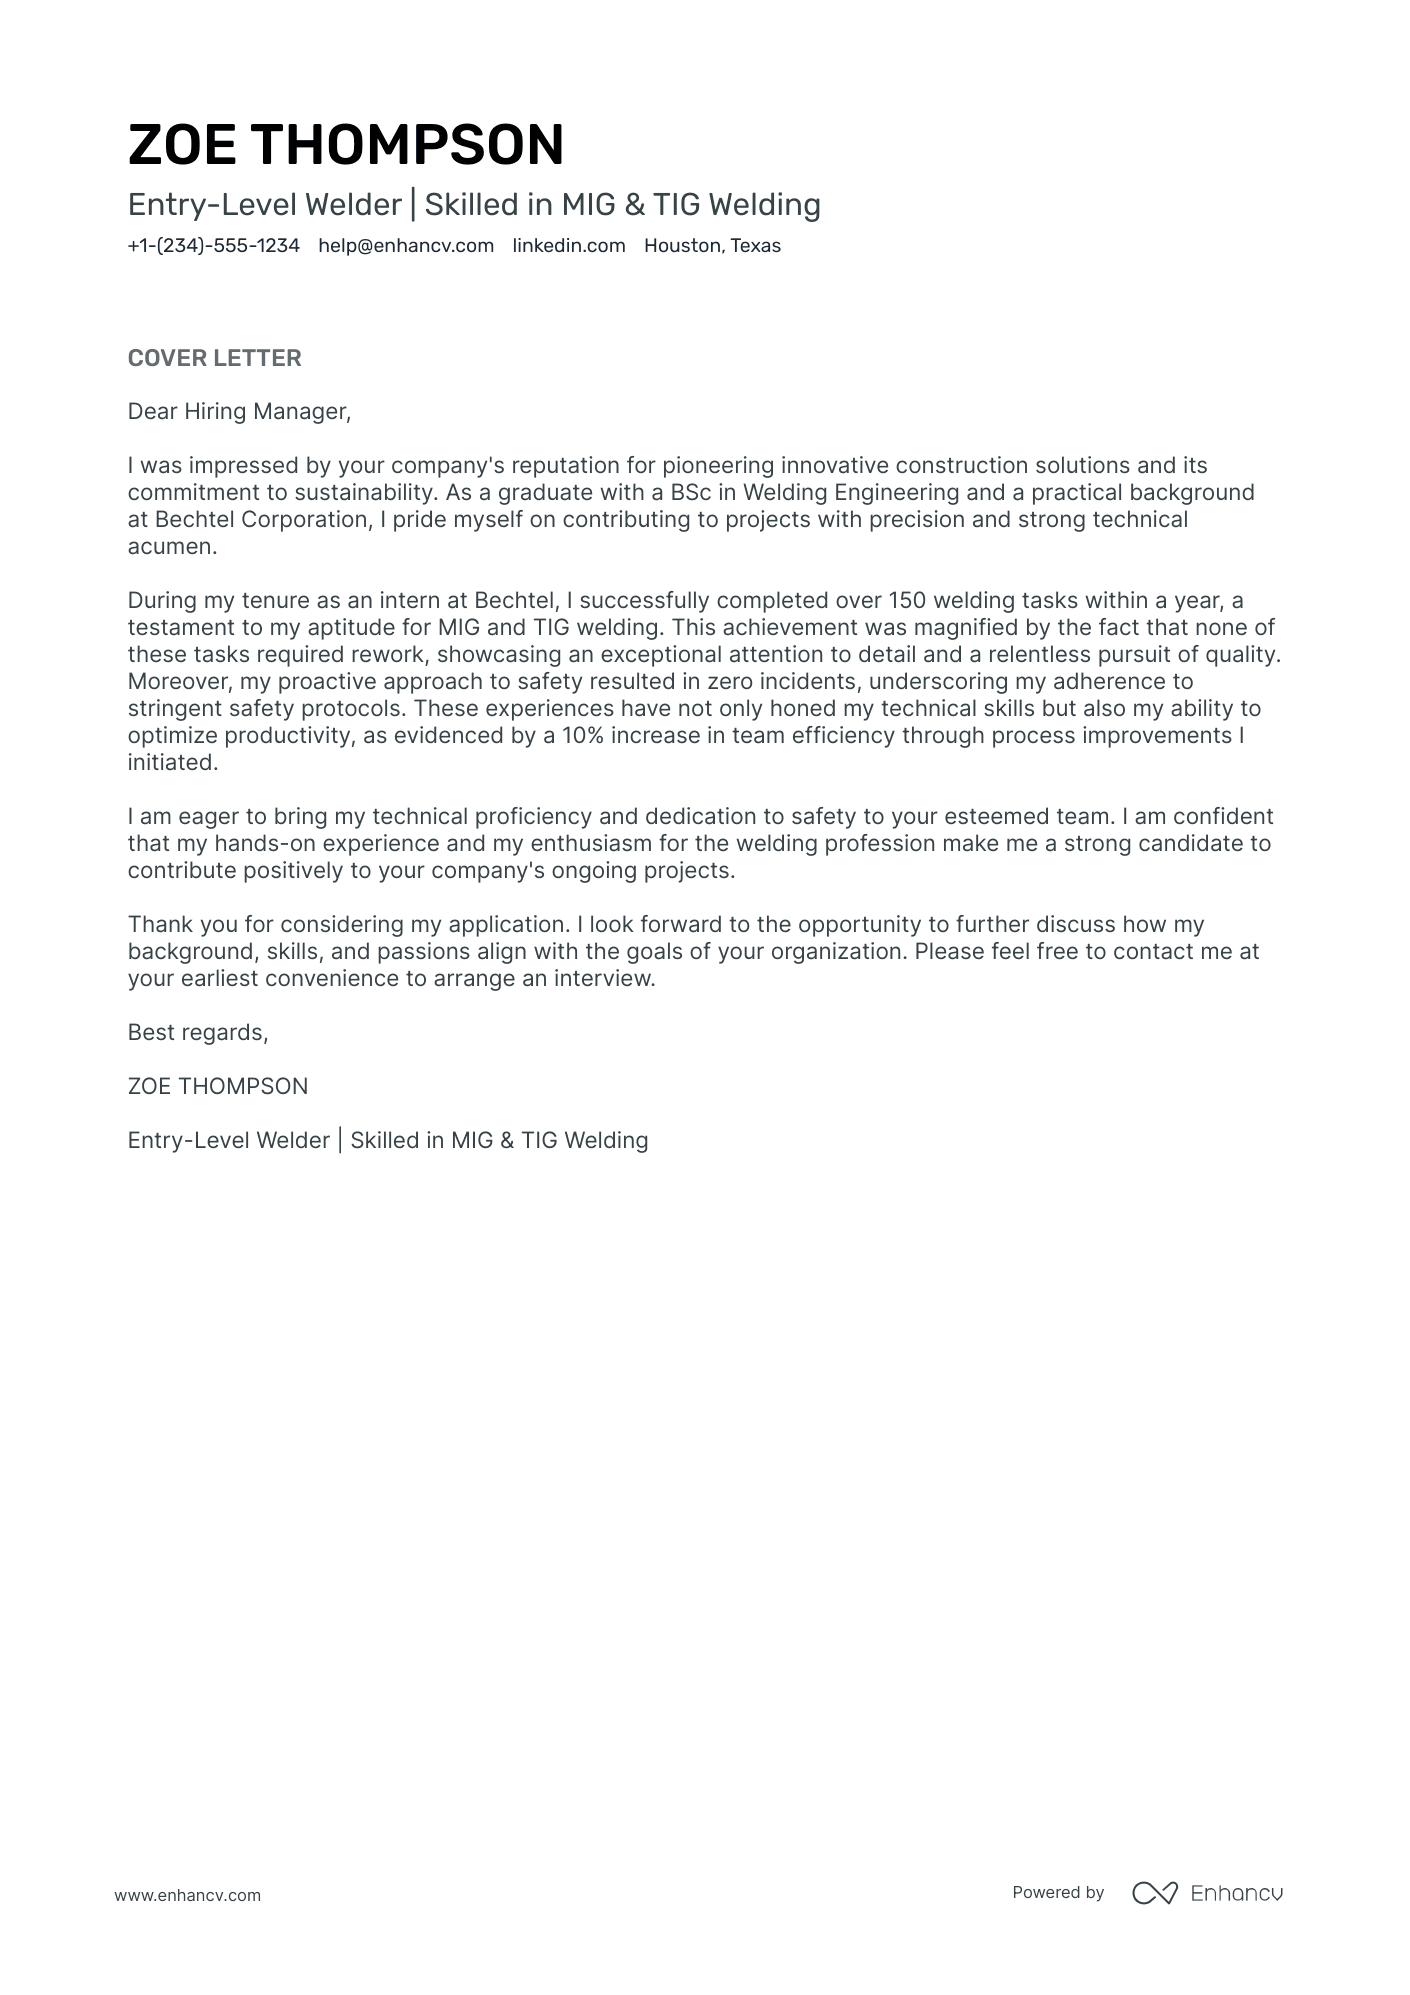 application letter for welder position